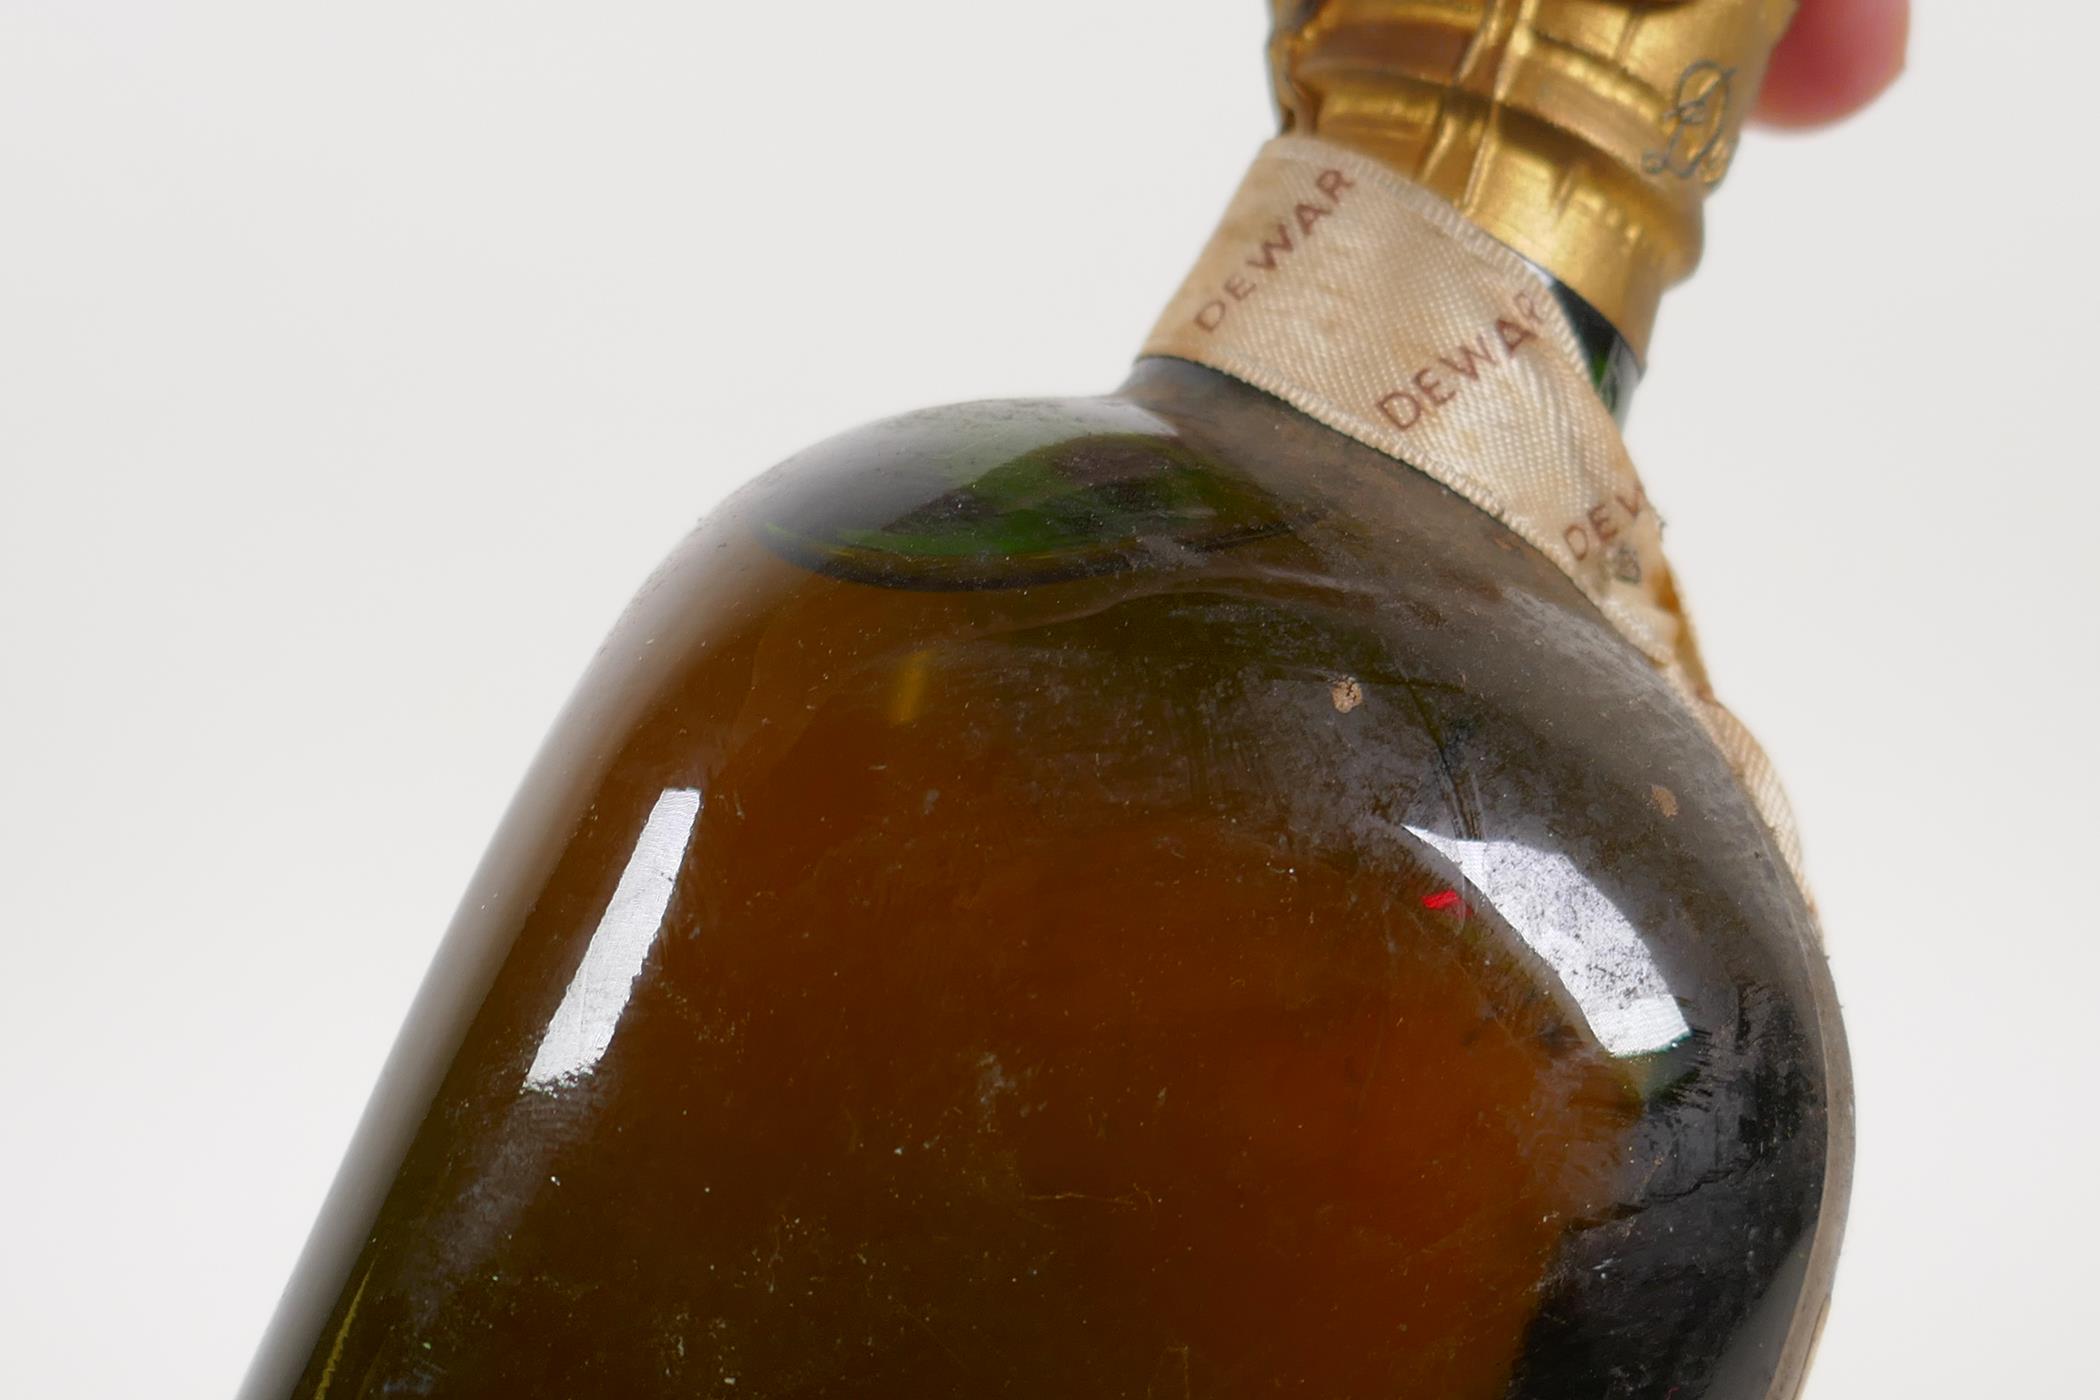 A bottle of Dewar's Ancestor Rare Old Scotch Whisky (Blended), circa 1950, 70% proof, sealed, 75cl - Image 6 of 7